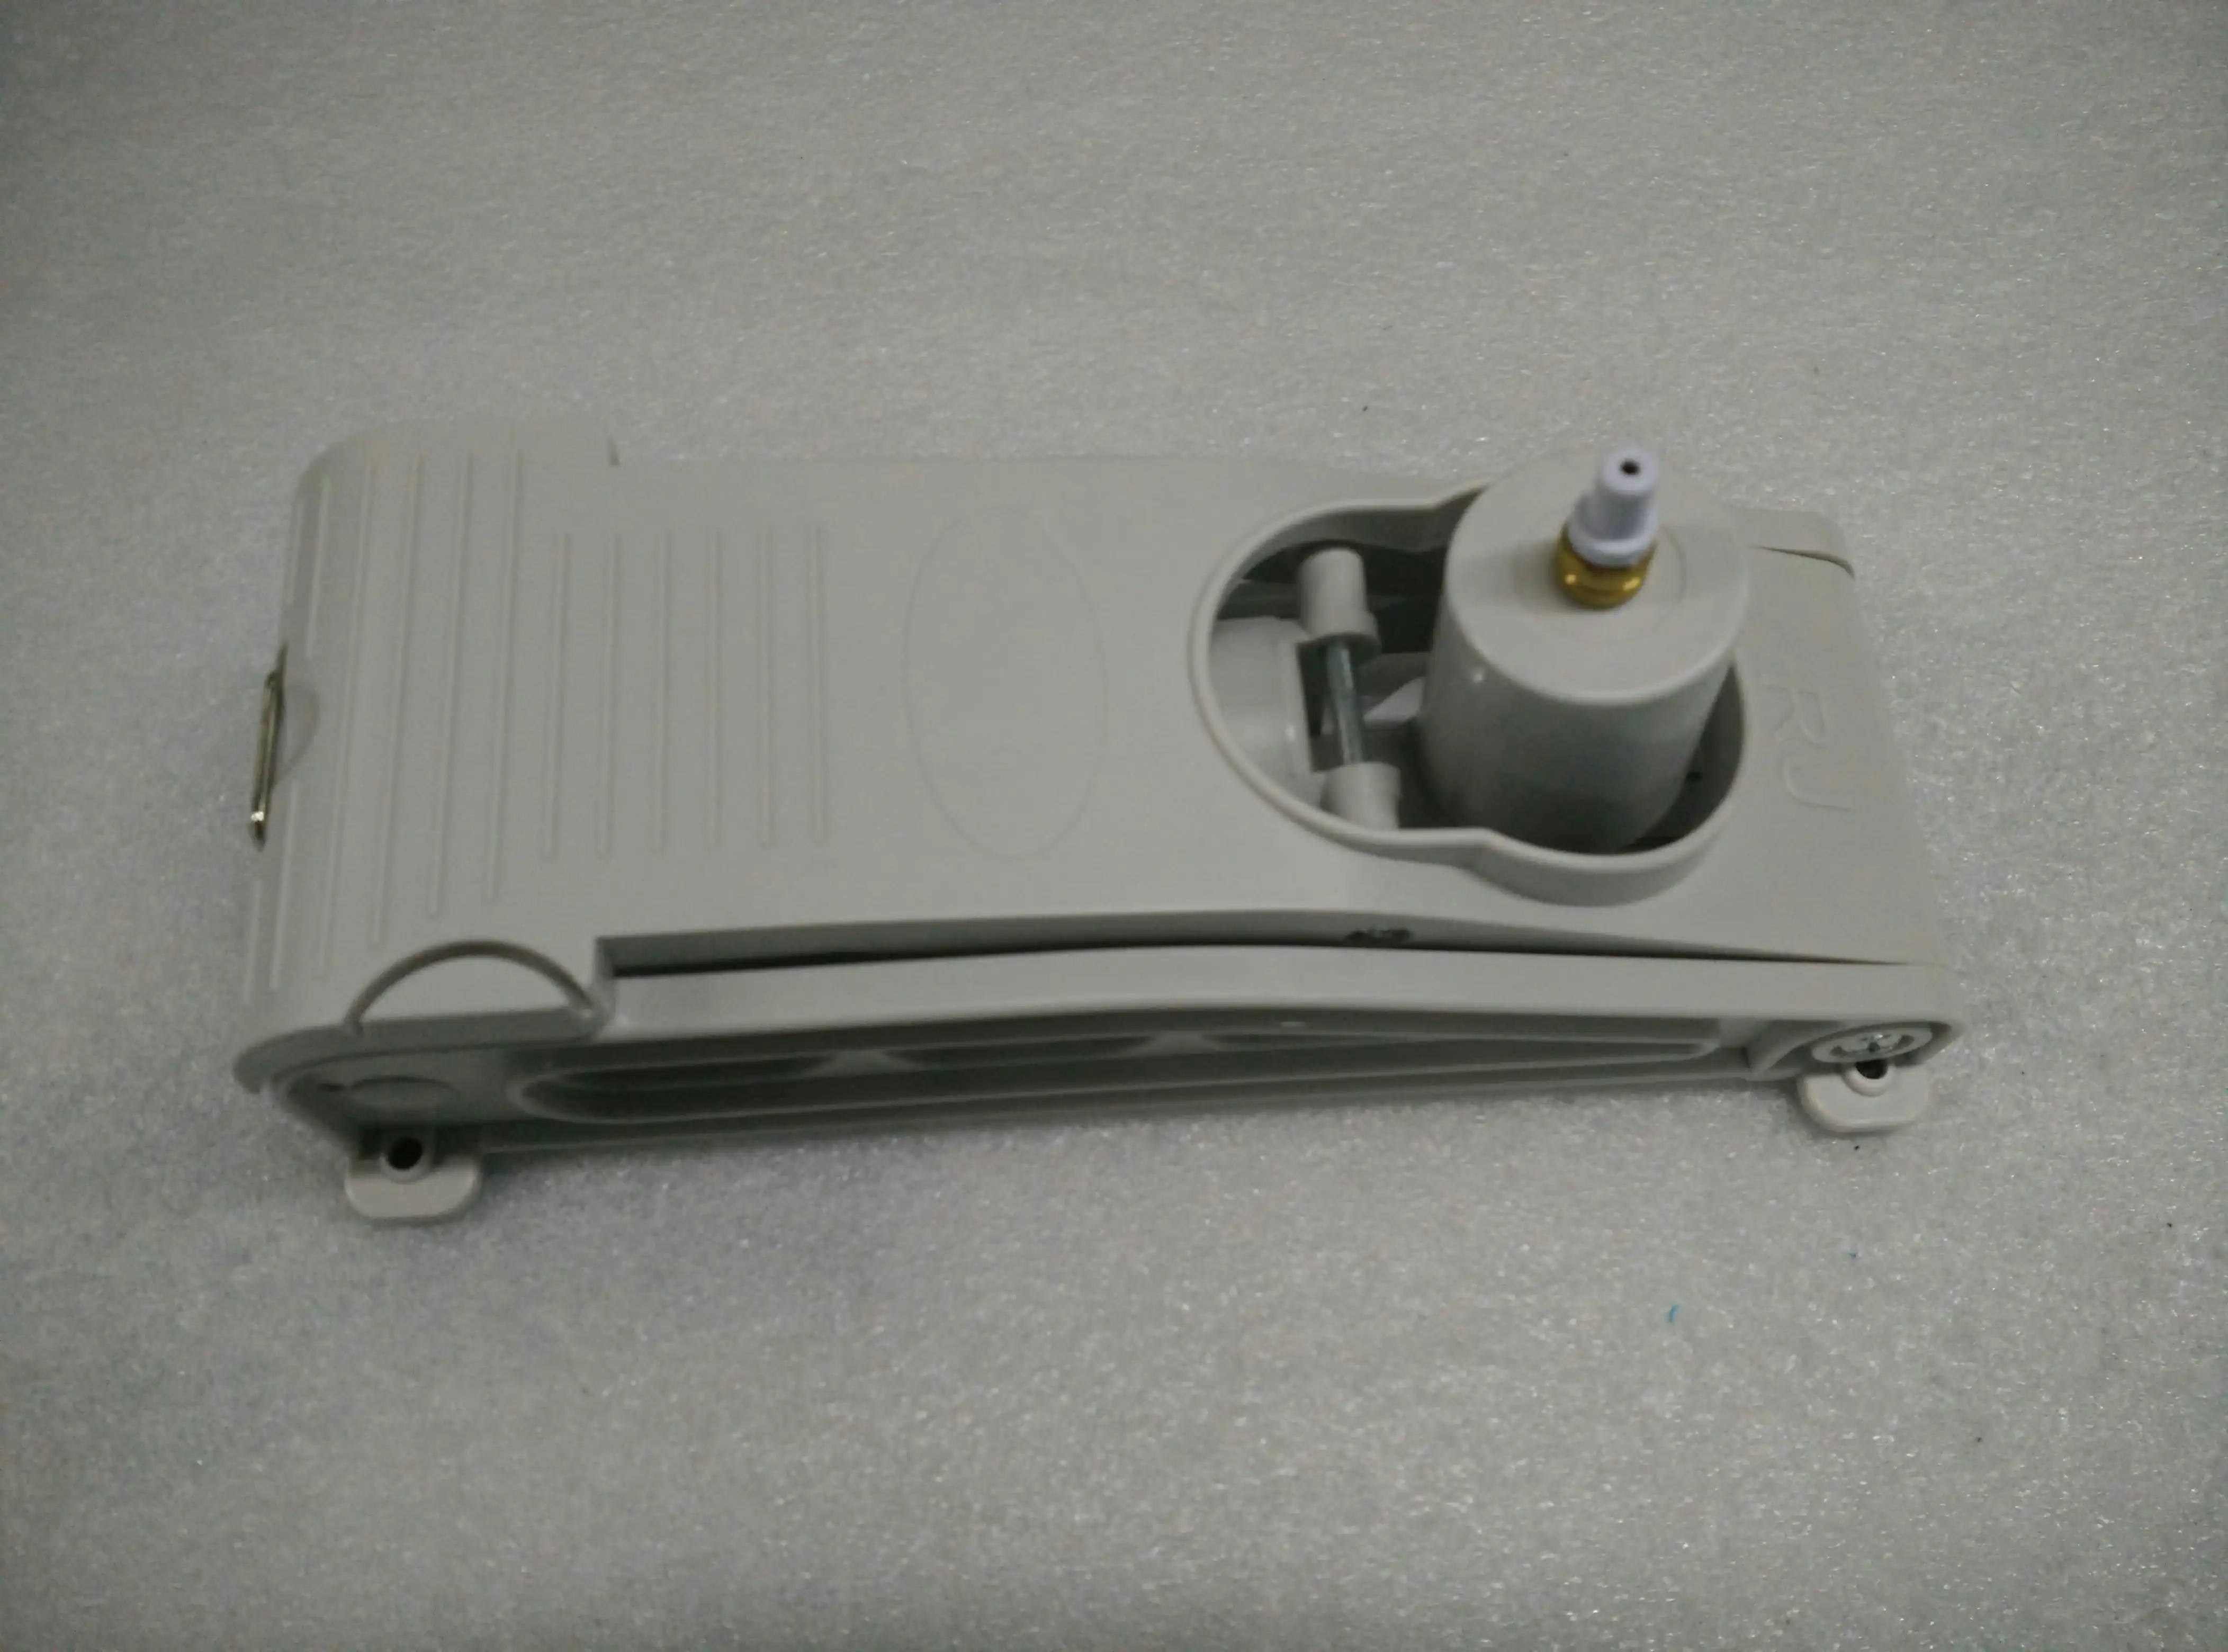 Easy Air Nebuliser Foot Pump, Portable and Lightweight, 700grams, 11 x 190 x 30mm, Each